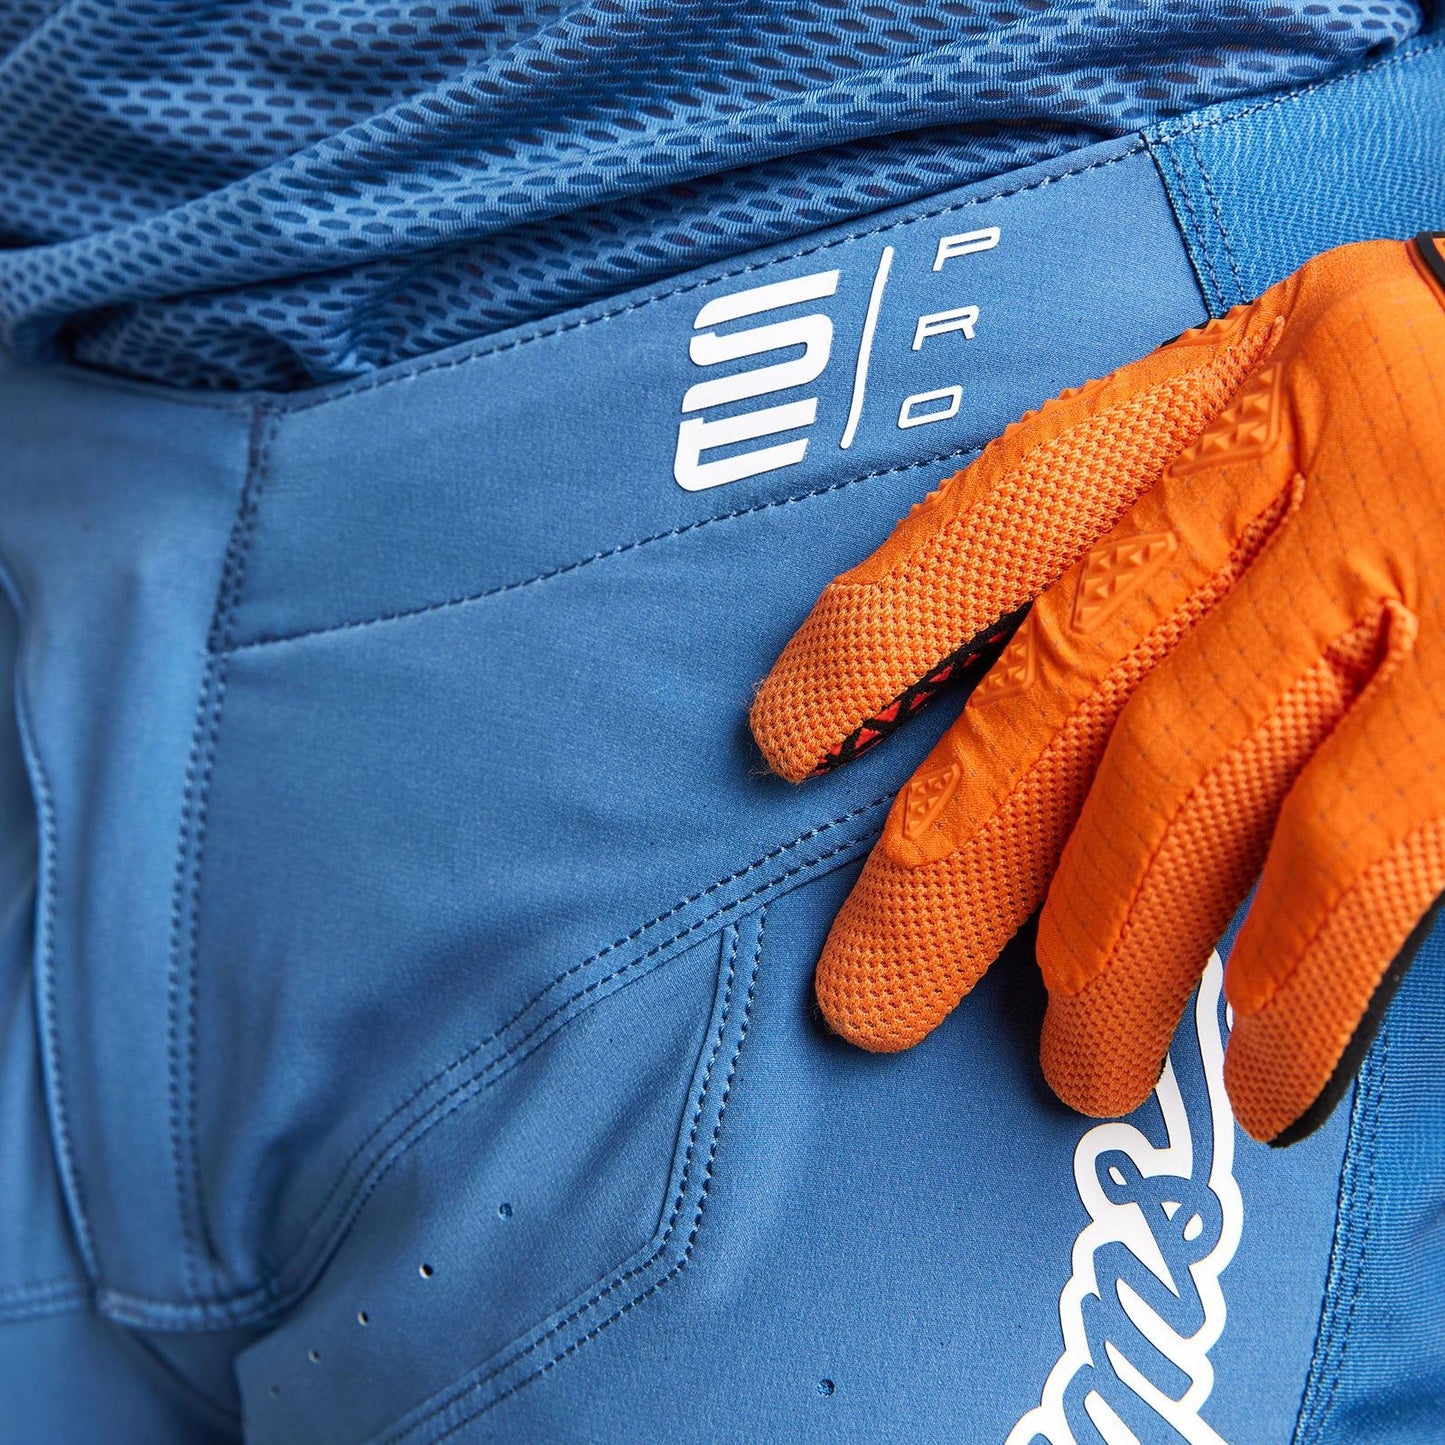 Troy Lee Designs 2025 Motocross Combo Kit SE Pro Pinned Blue